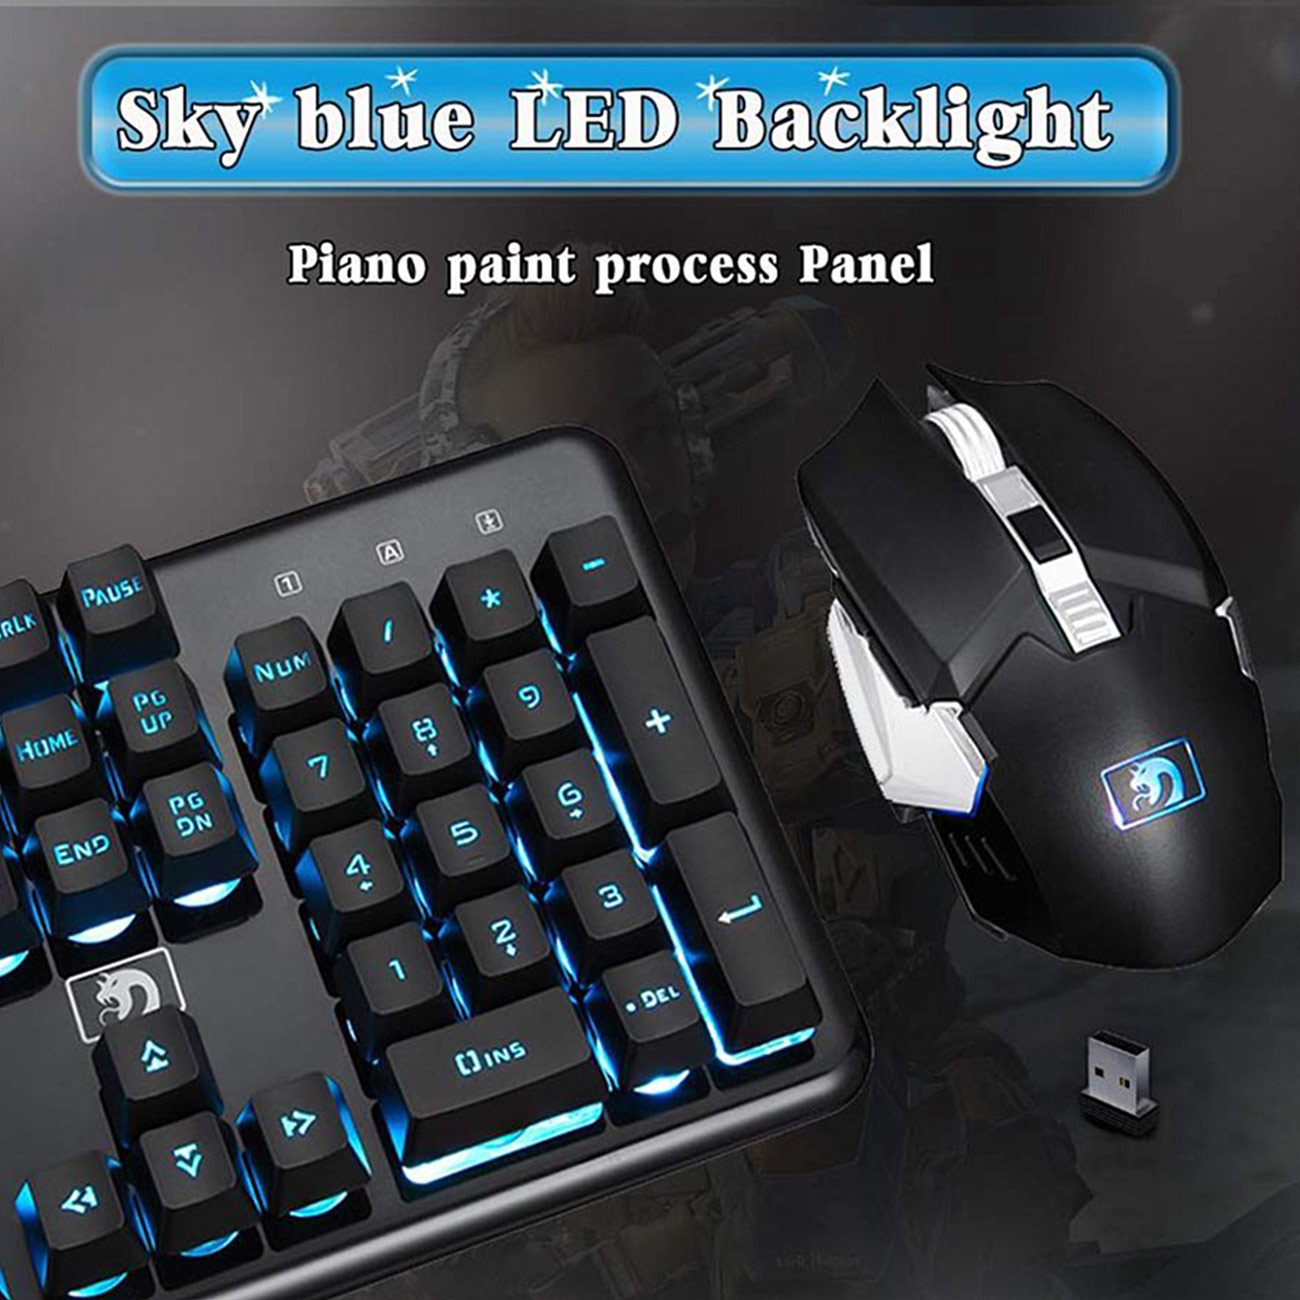 E Sport Wireless Charging Glowing Manipulator Gaming Keyboard And Mouse Set Newegg Com